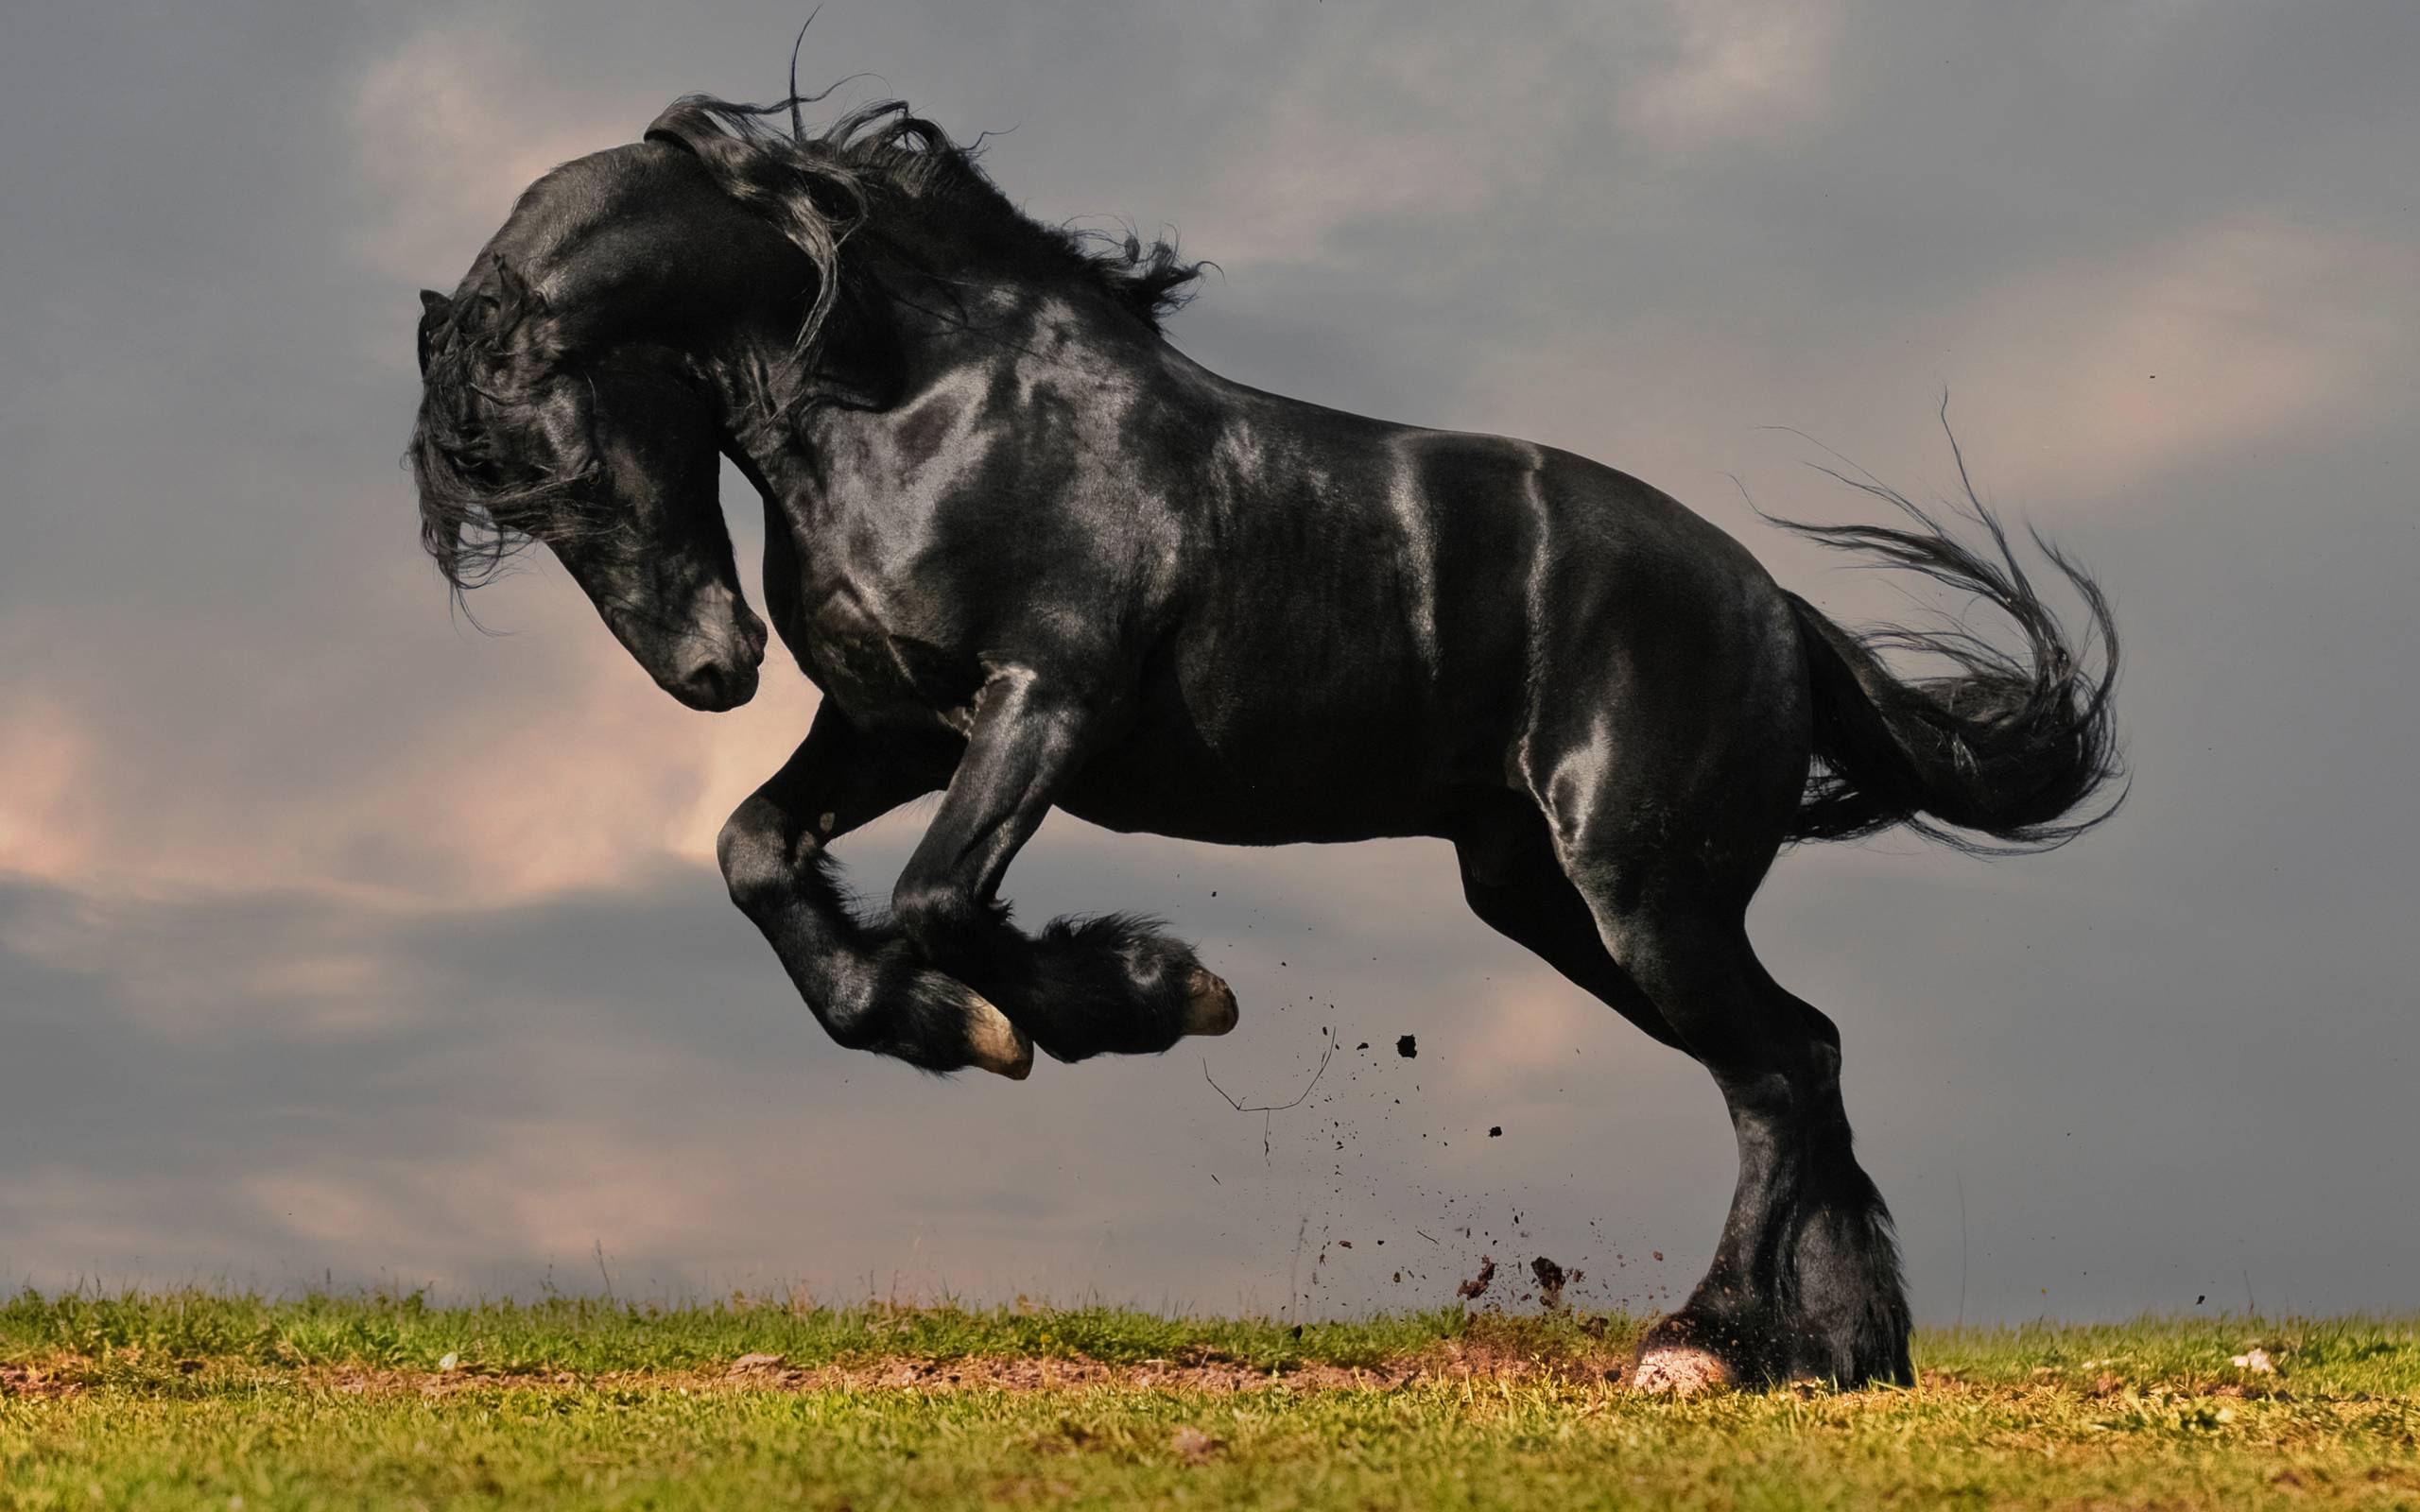 Black Horse HD Wallpaper. Download Black Horse Image. Cool